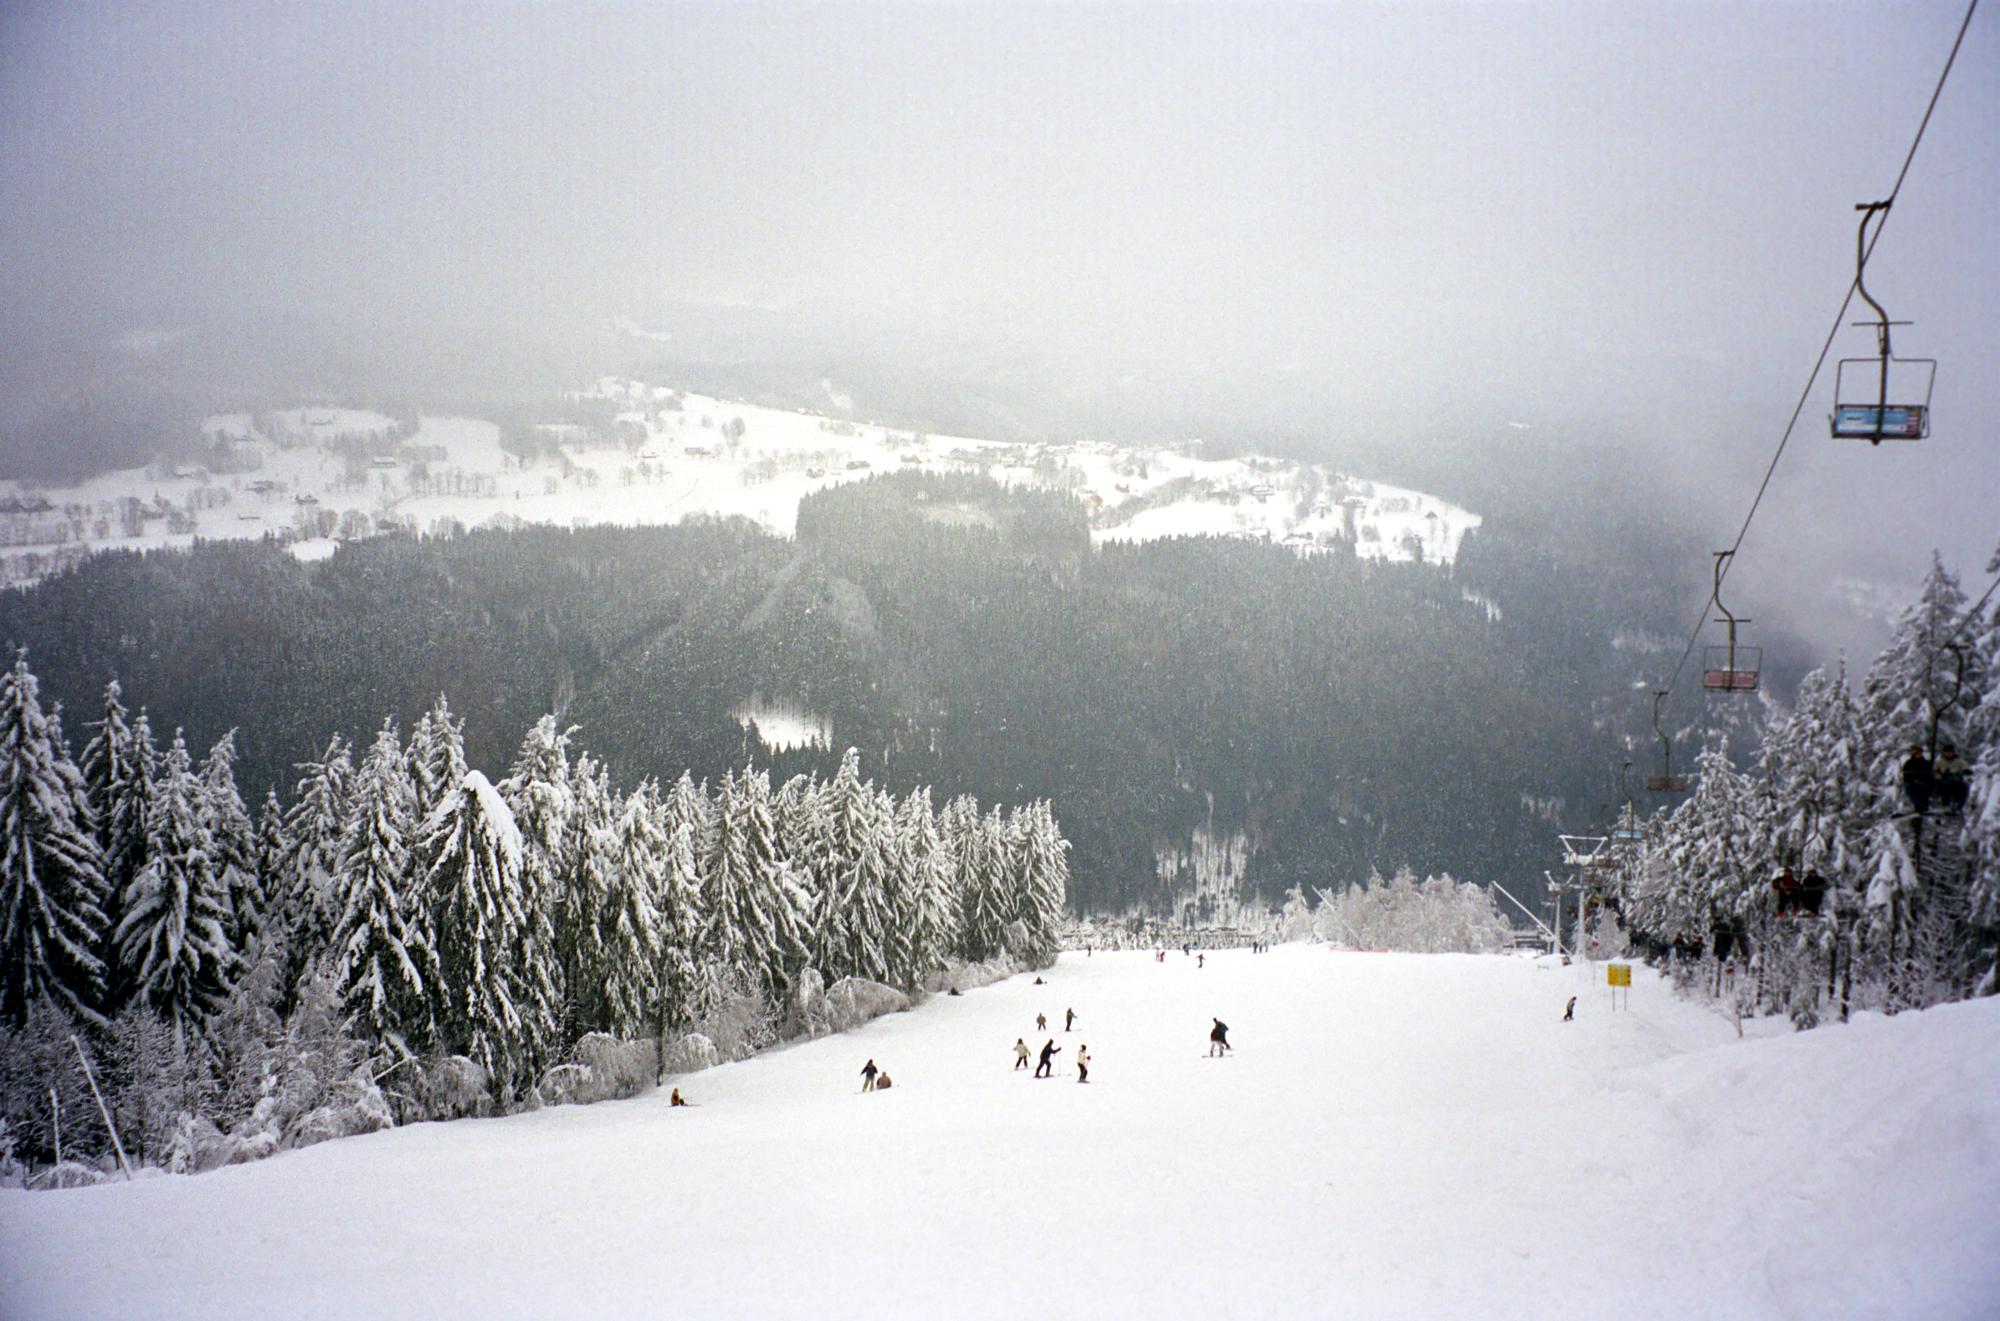 Czech Republic - Ski Slope